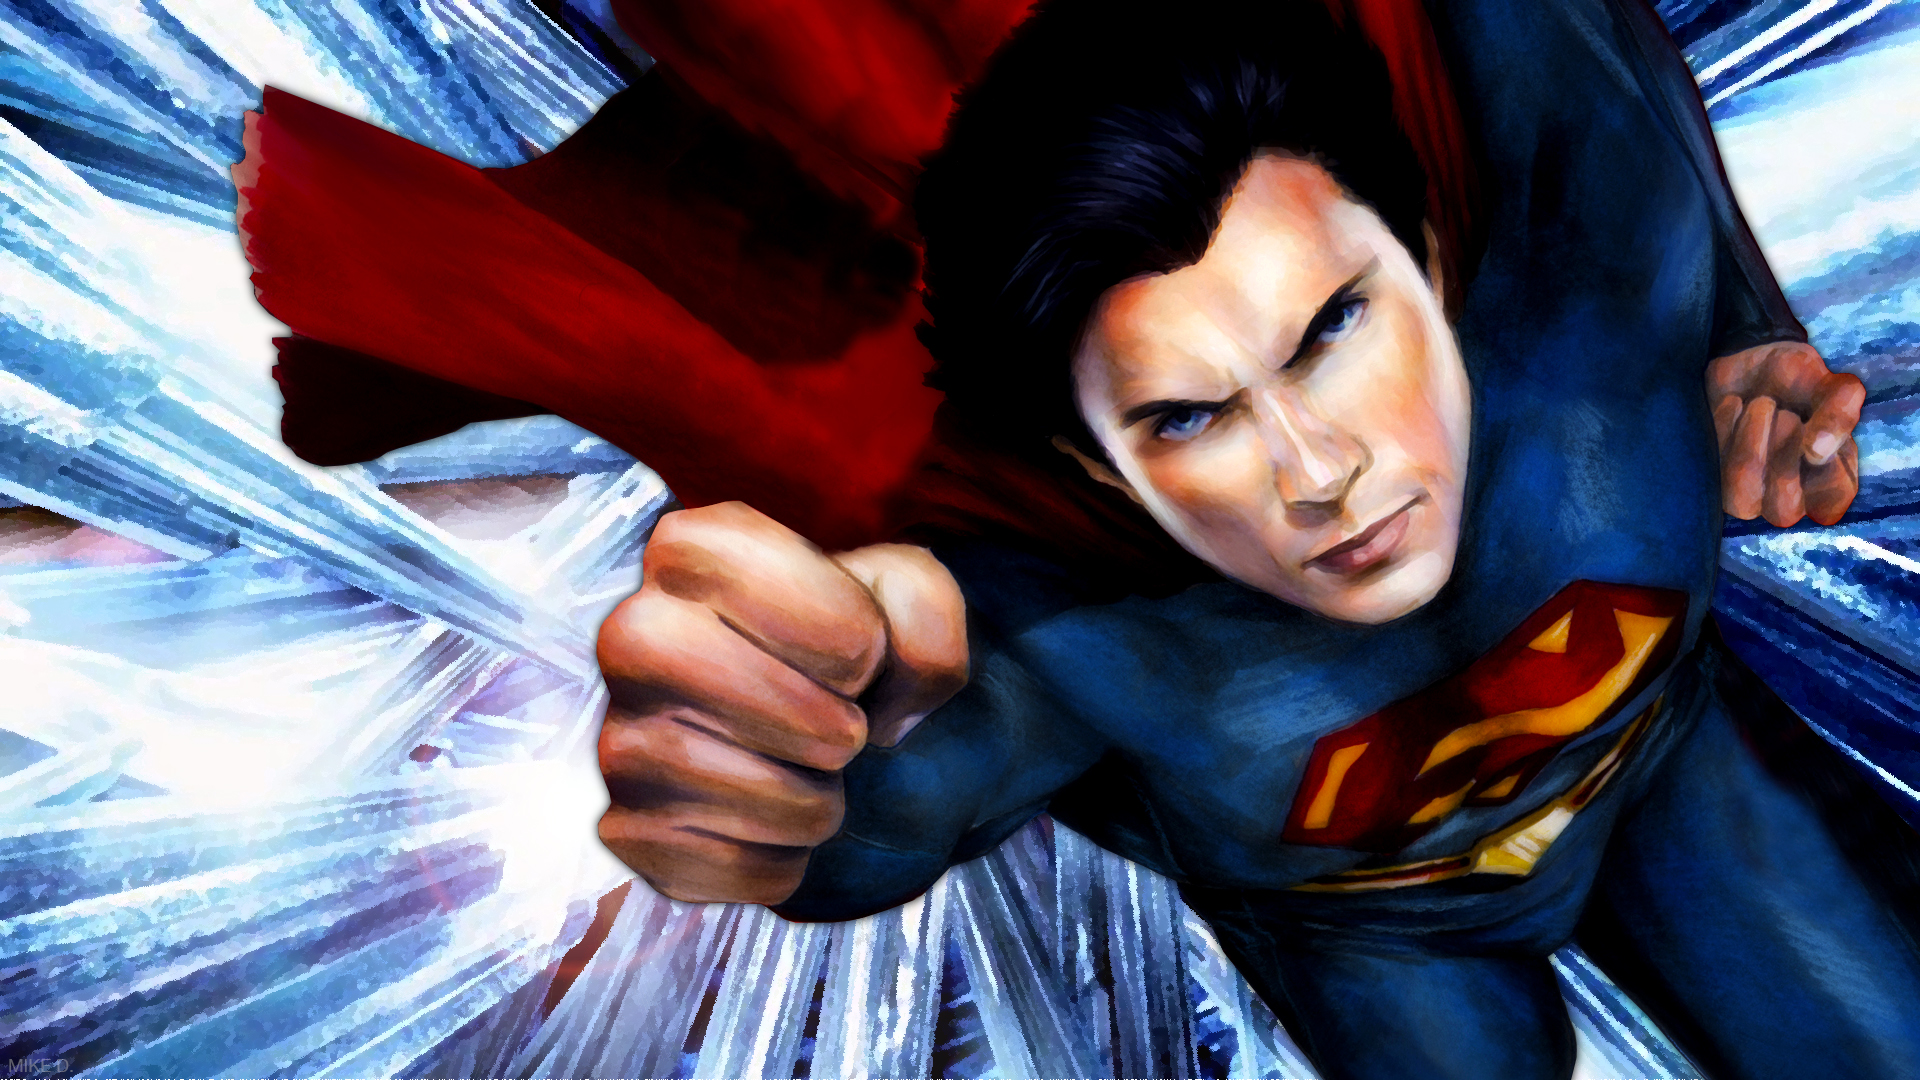 Baixar papel de parede para celular de Programa De Tv, Dc Comics, Super Homen, Smallville: As Aventuras Do Superboy gratuito.